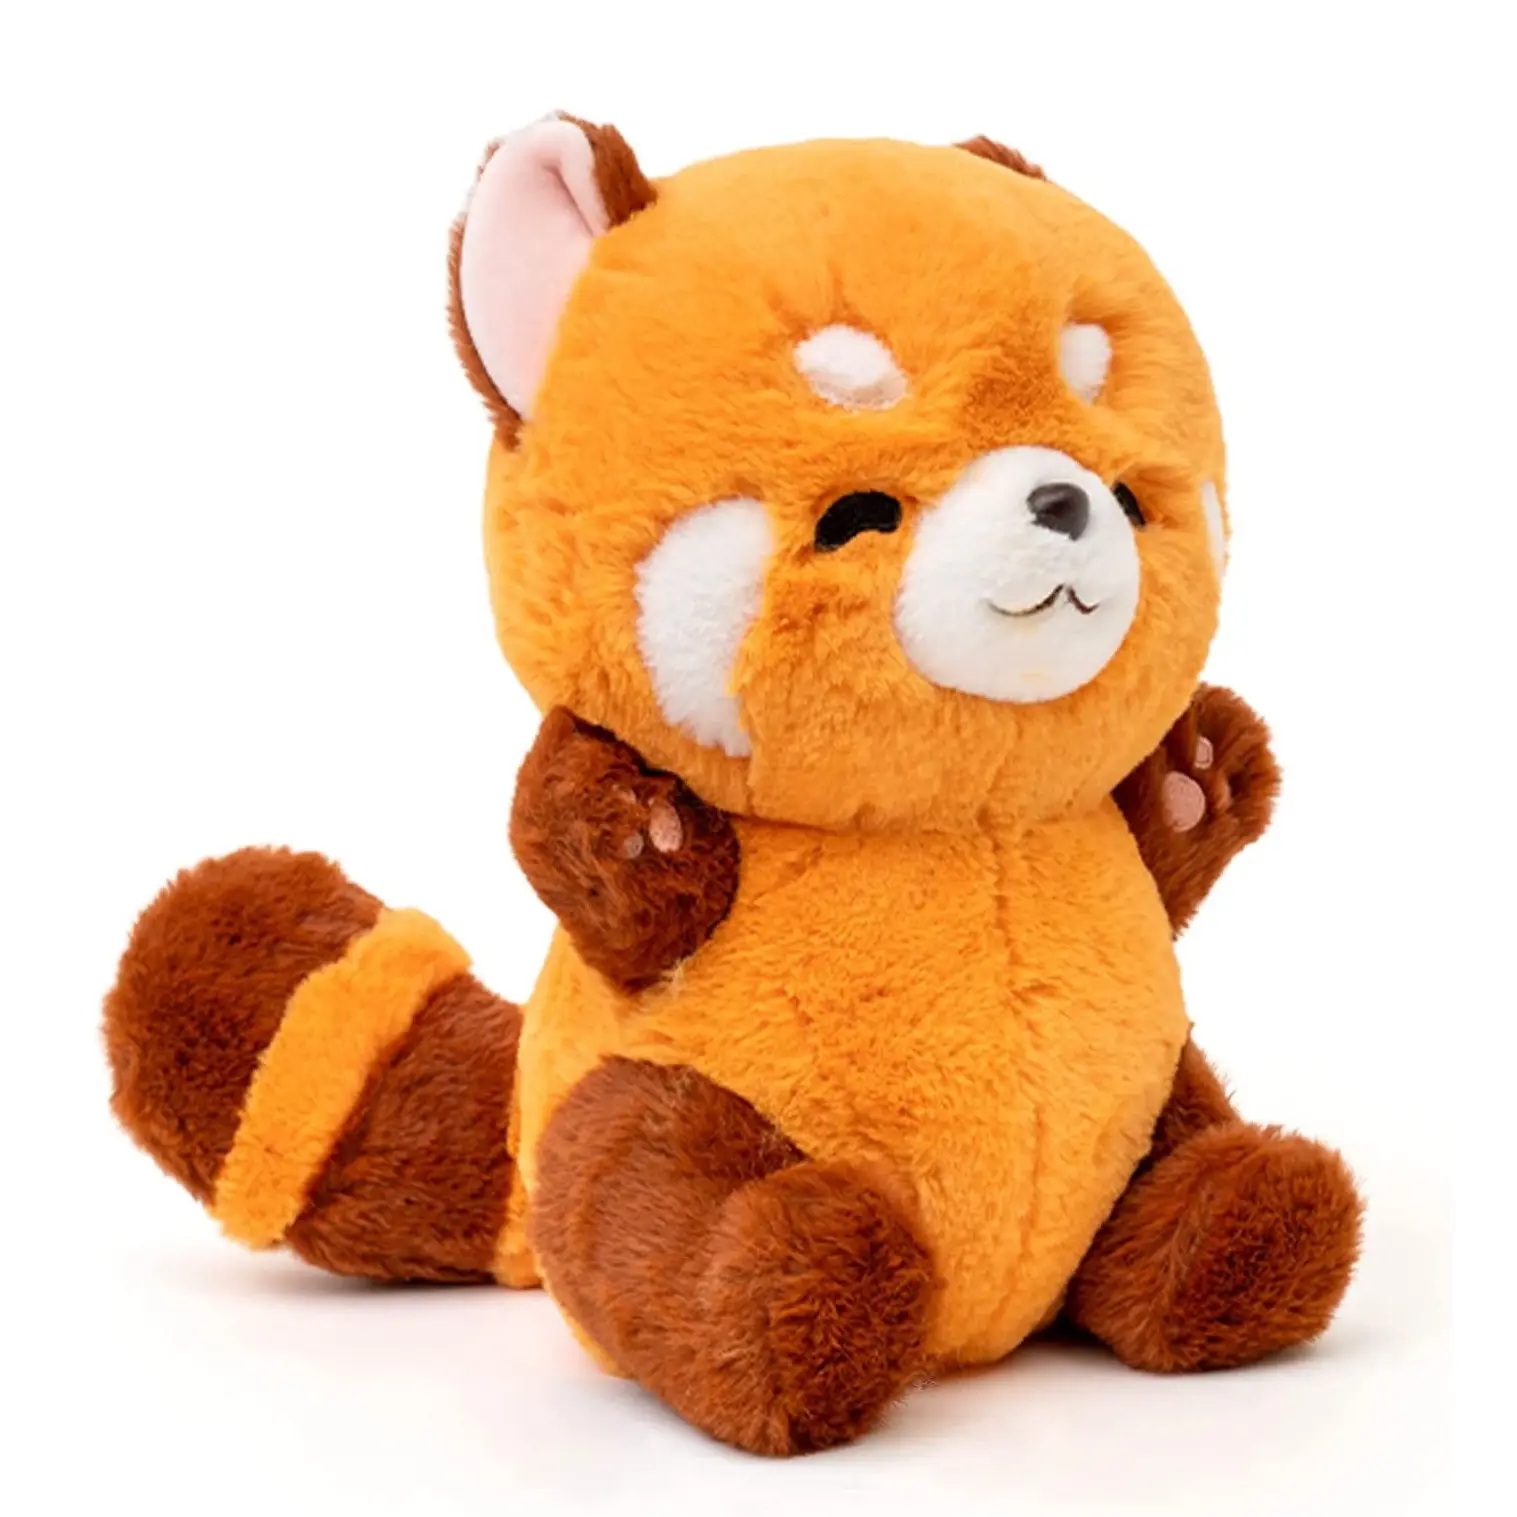 kawaii Red Panda stuffed animal orange cute small panda plushie toy baby best friend soft animal doll for hug